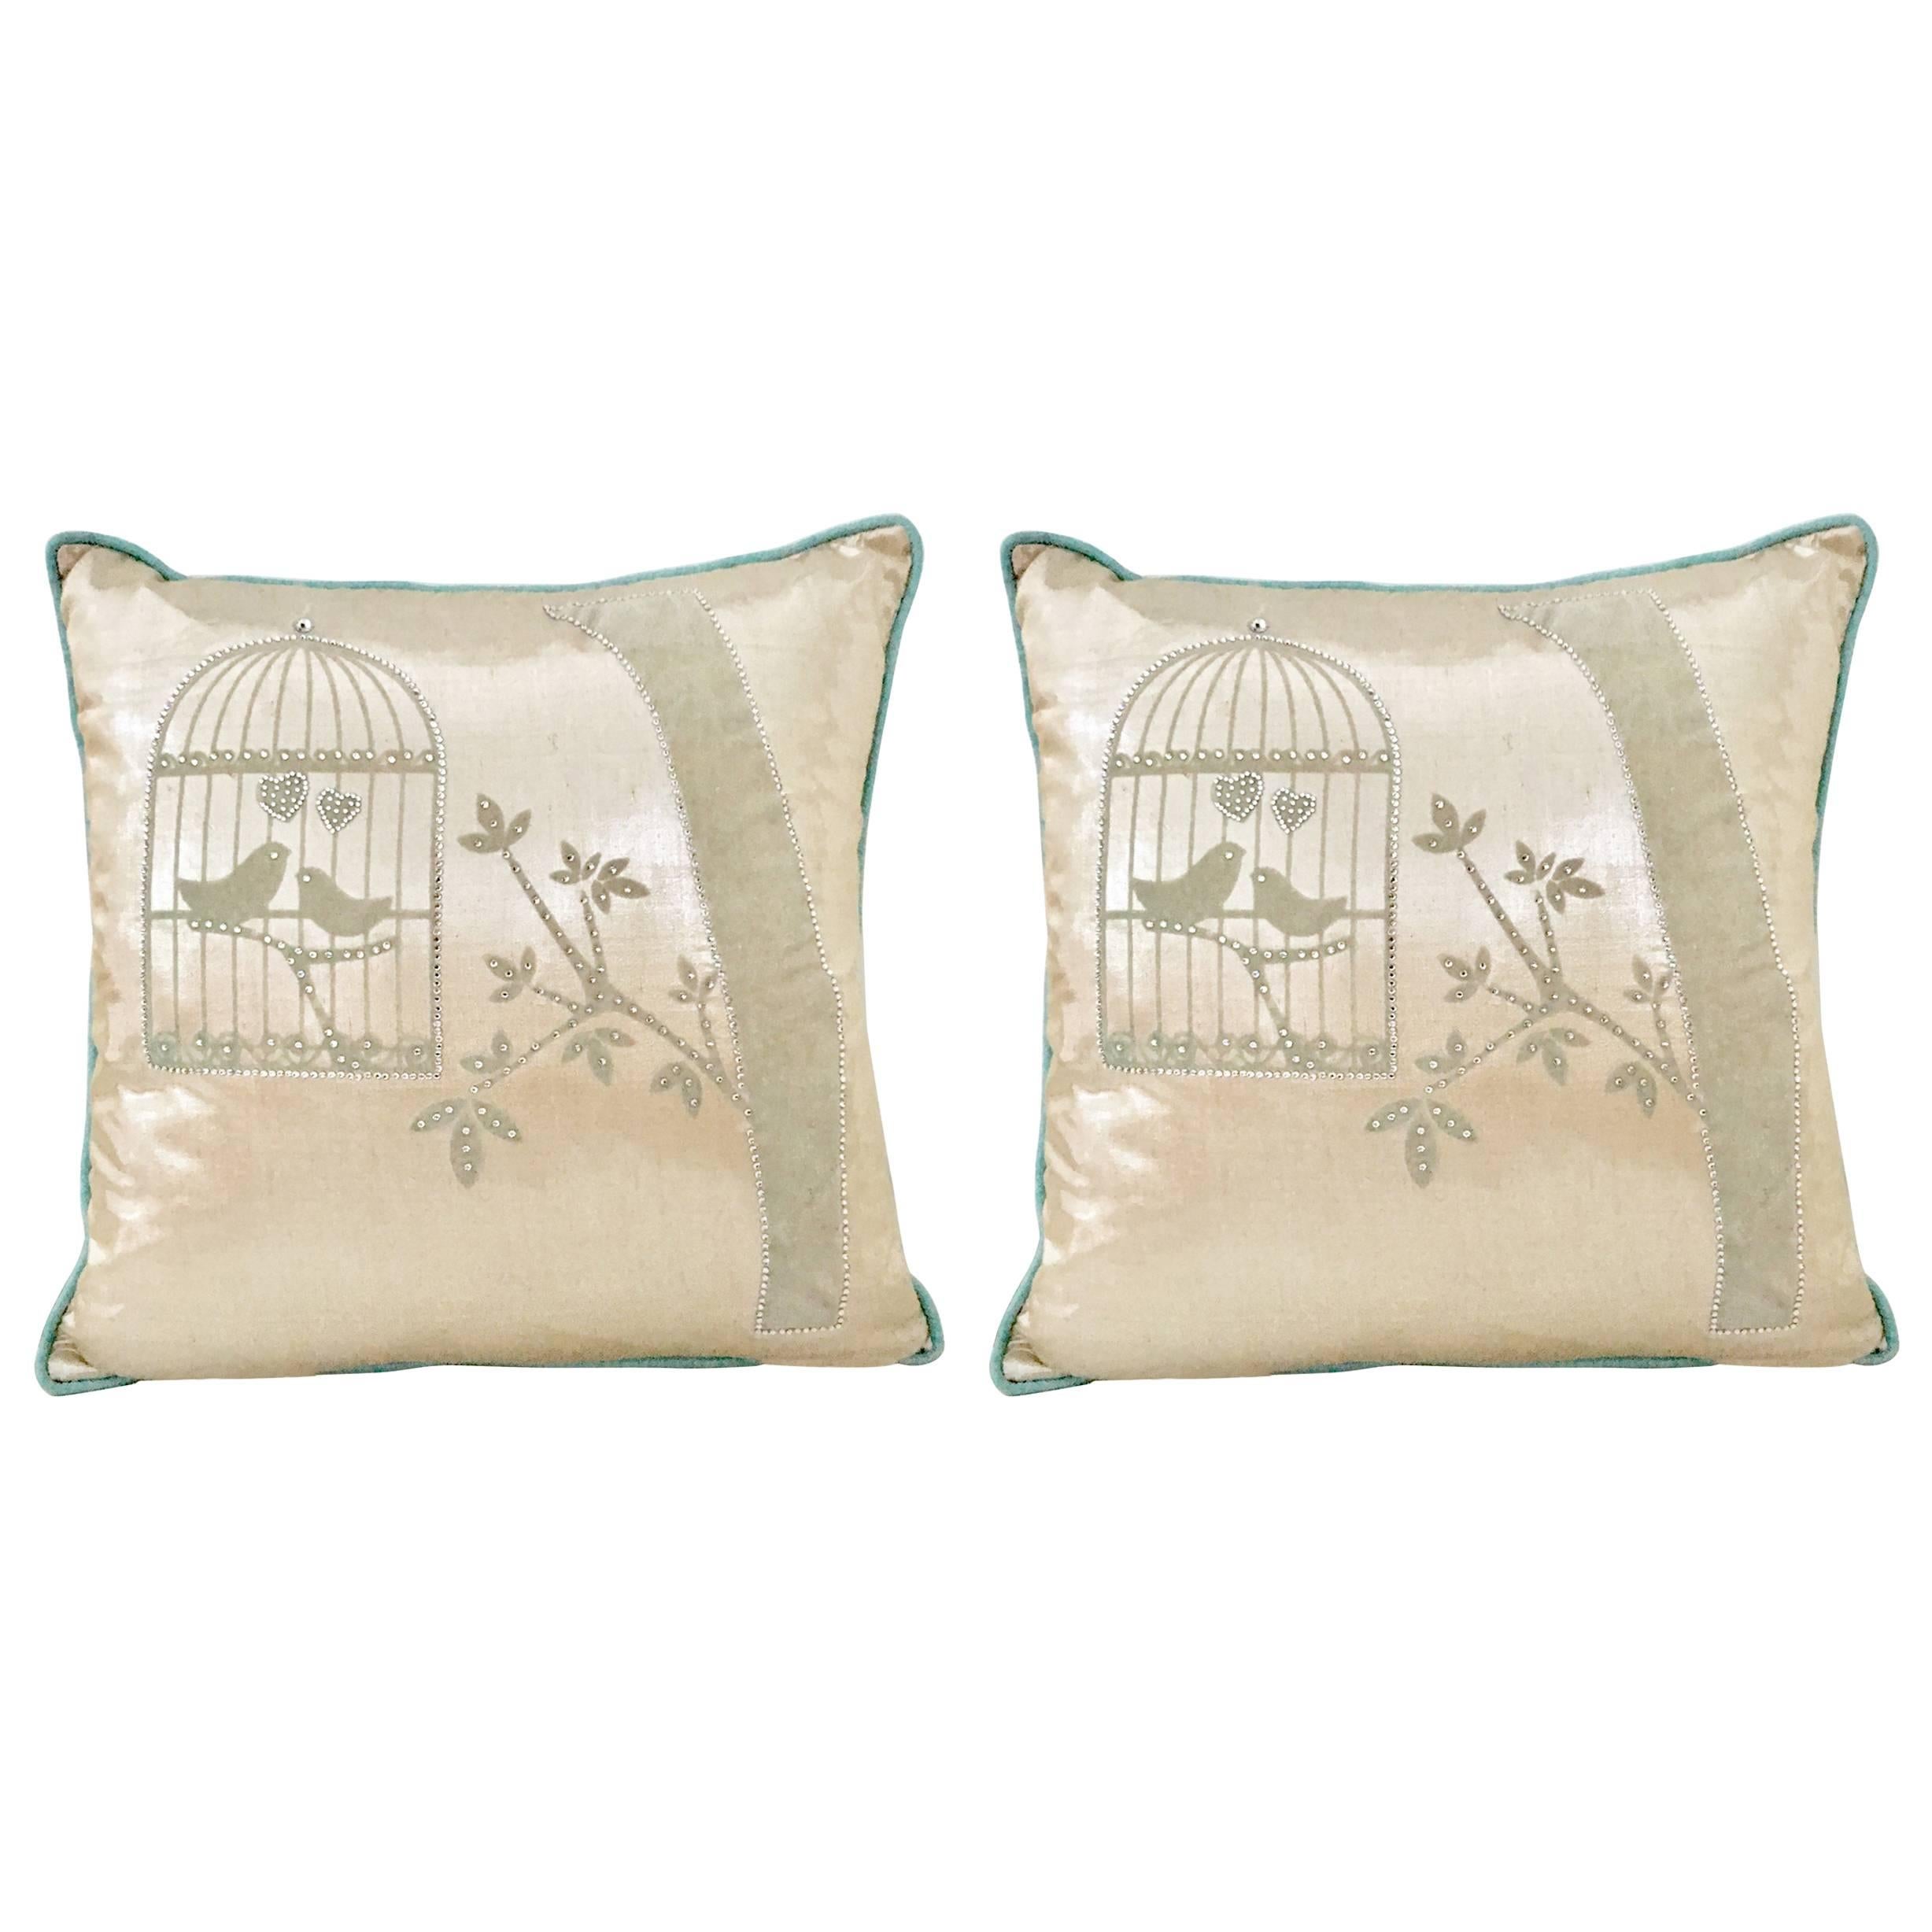 Pair Of Contemporary Silk & Down "Bling" Bird Cage Pillows